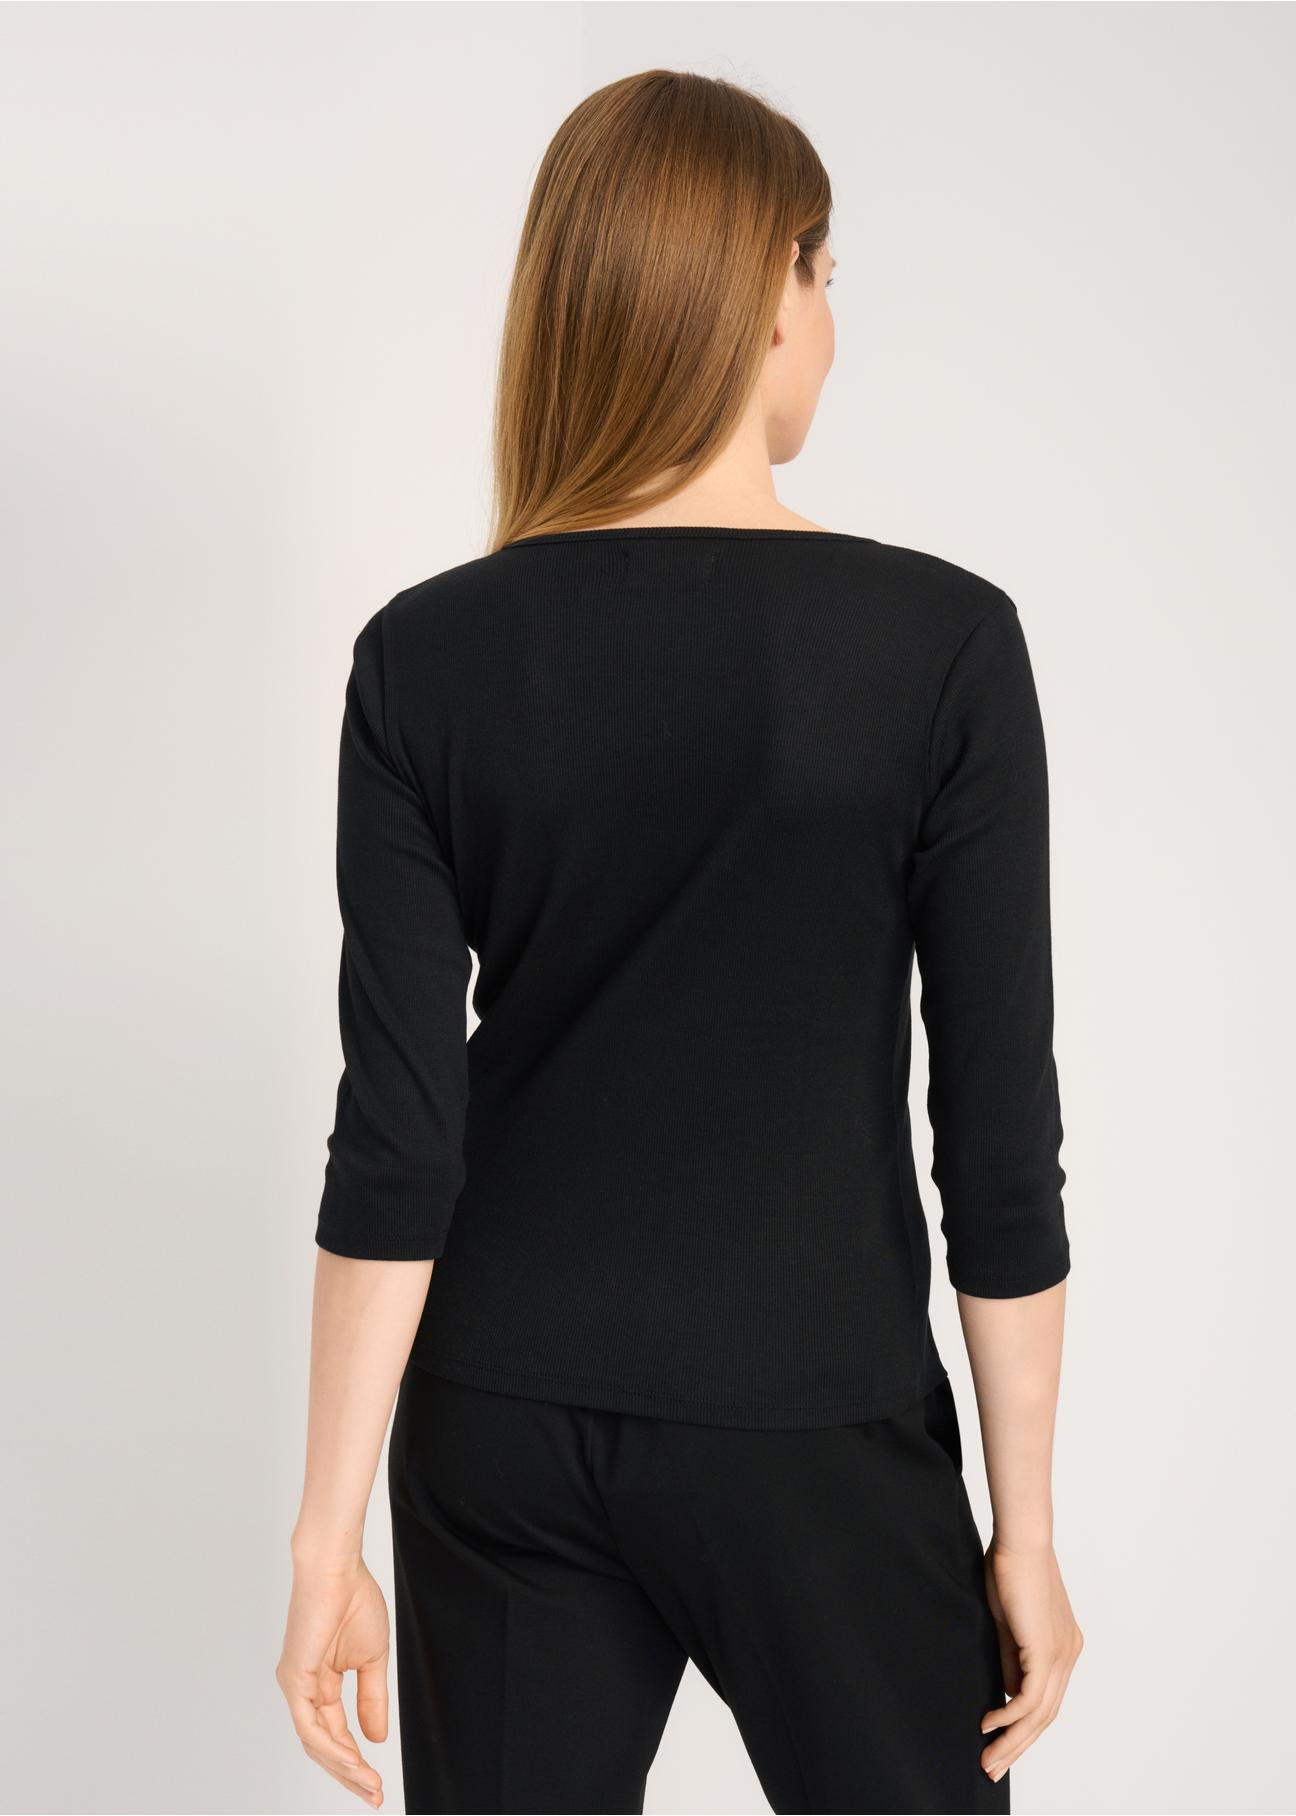 Czarna bluzka V dekolt damska LSLDT-0036-99(W24)